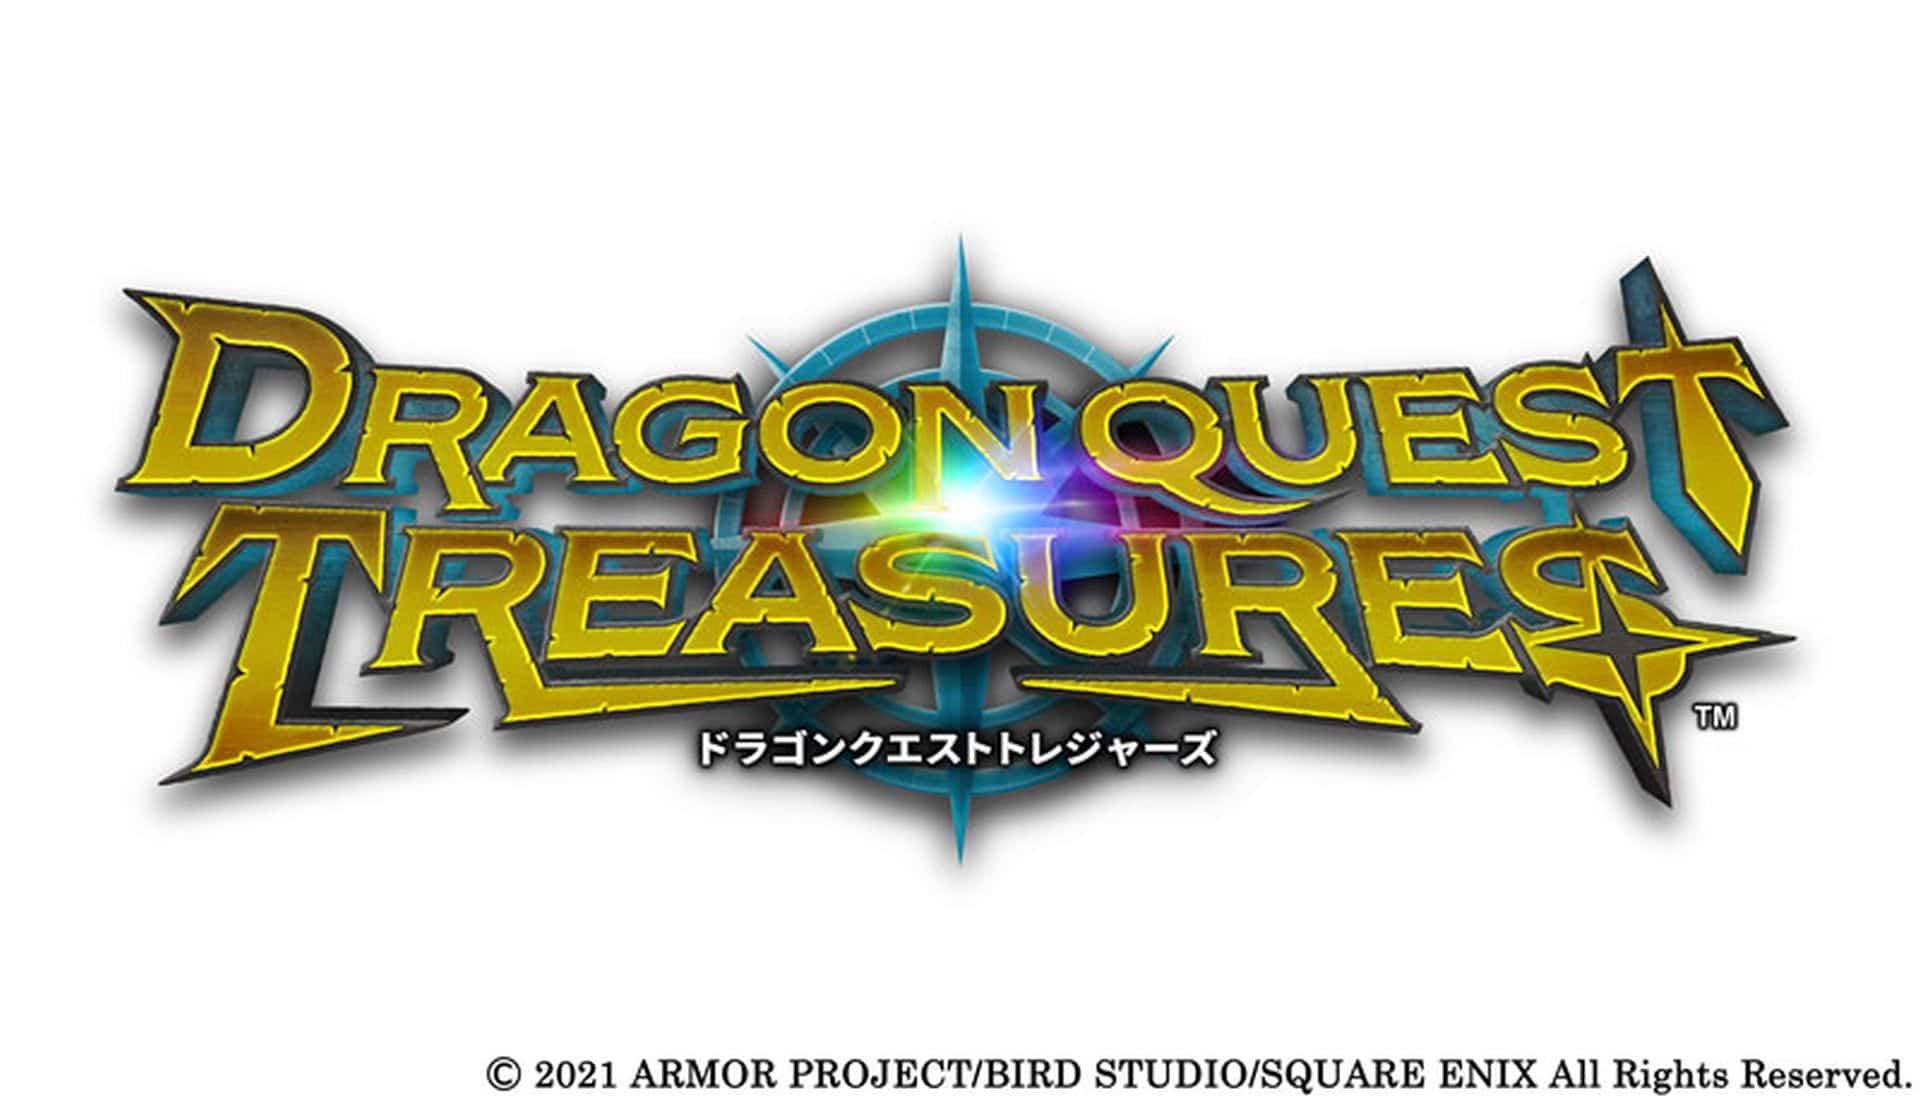 Square Enix lanza un nuevo teaser de Dragon Quest Treasures, GamersRD